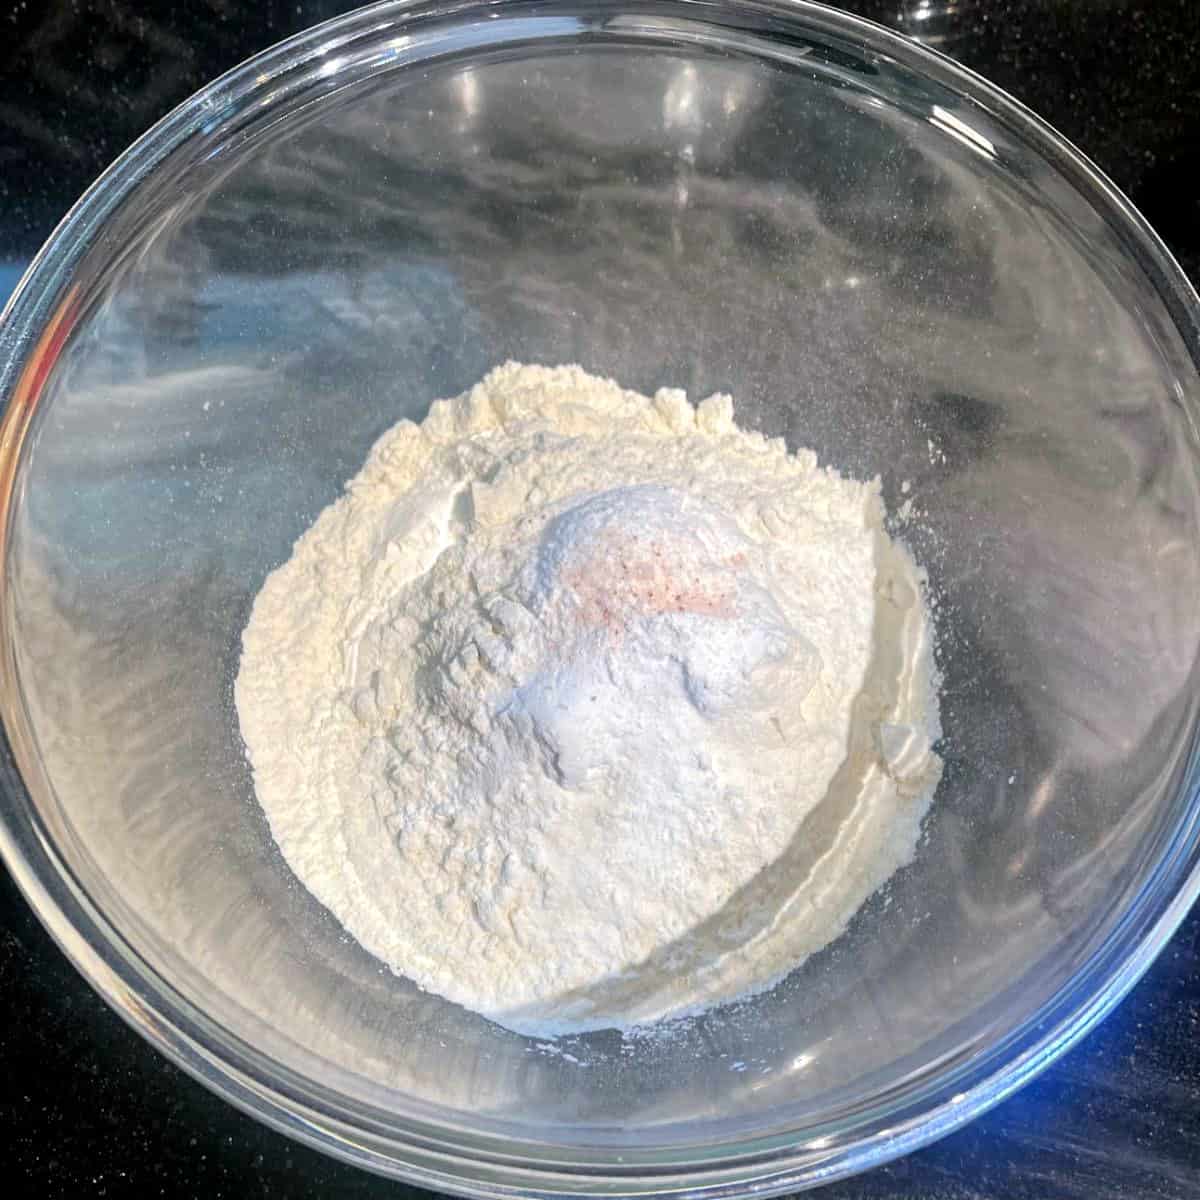 Dry ingredients for vegan rhubarb muffins in bowl.